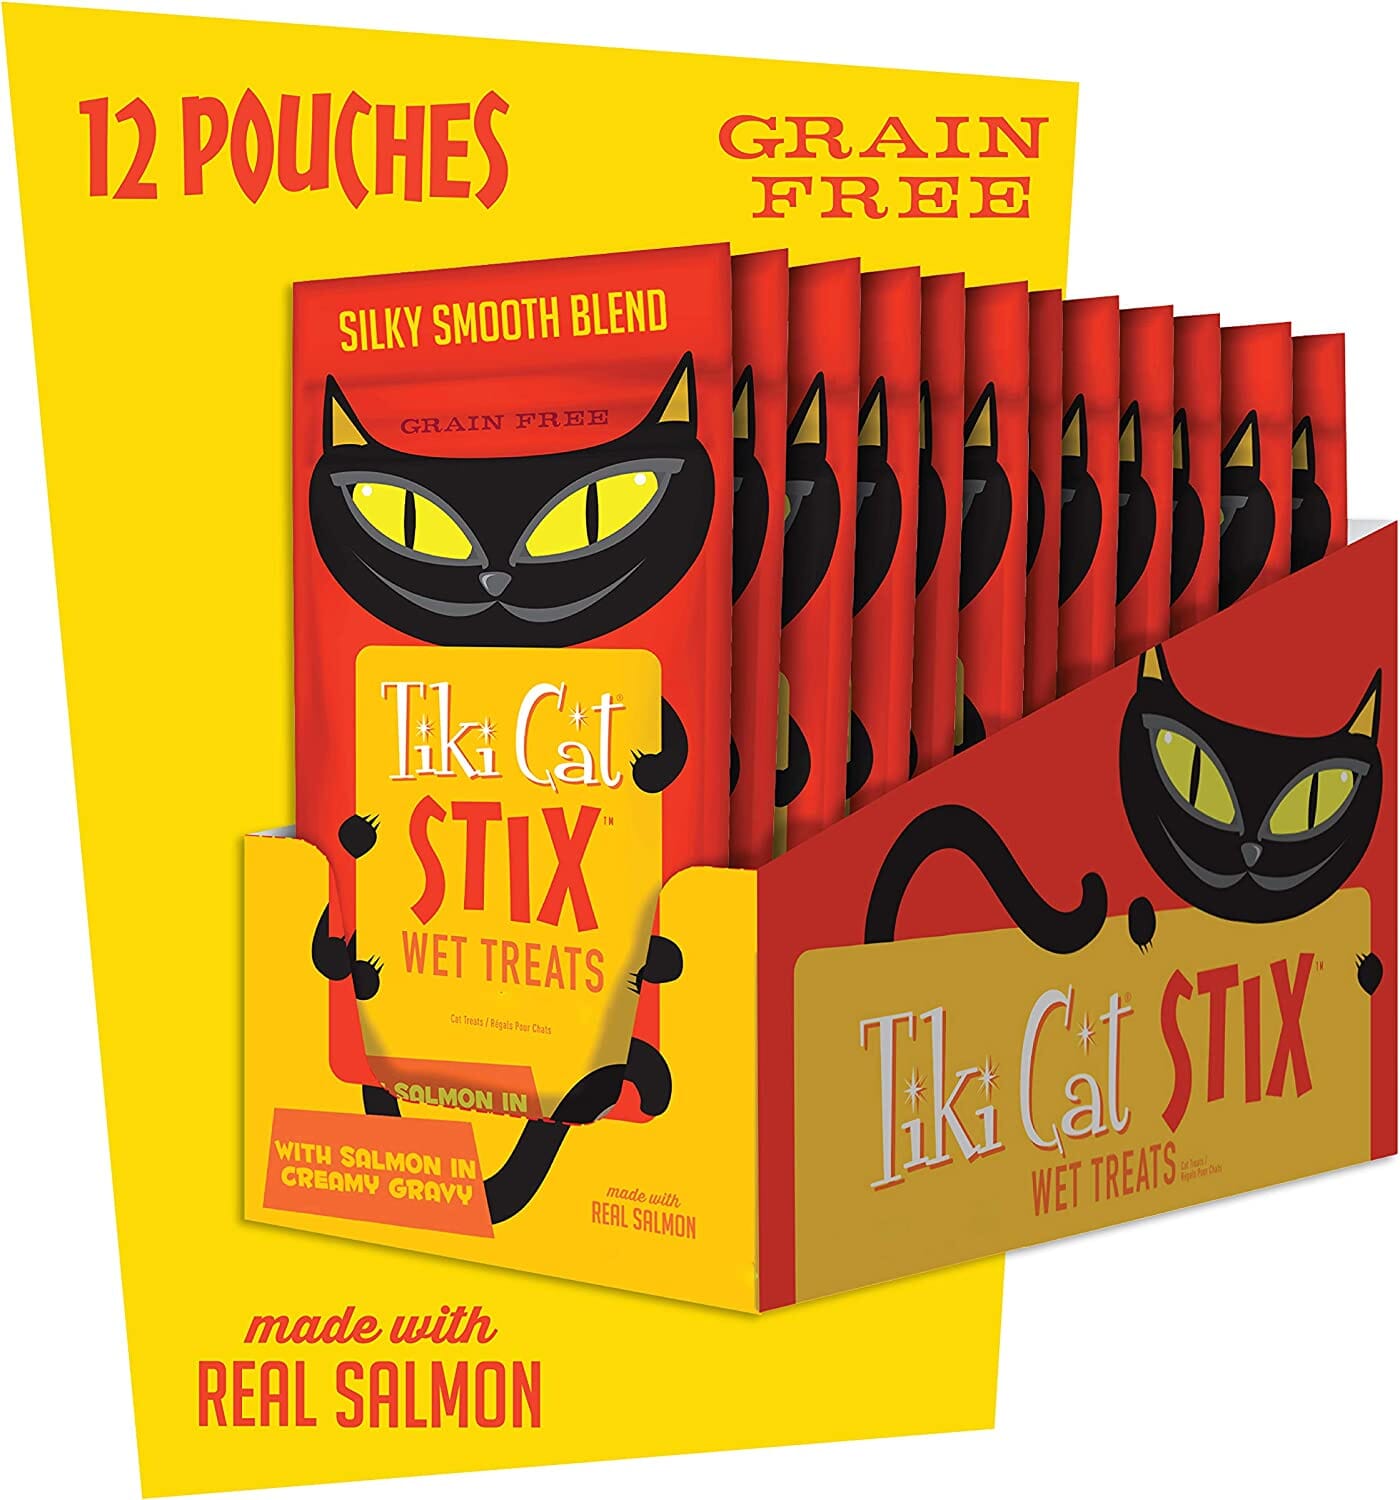 Tiki Cat Salmon Mousse STIX™ Cat Treats - (6 Tubes per Bag) - 3 Oz Bags - Pack of 12  